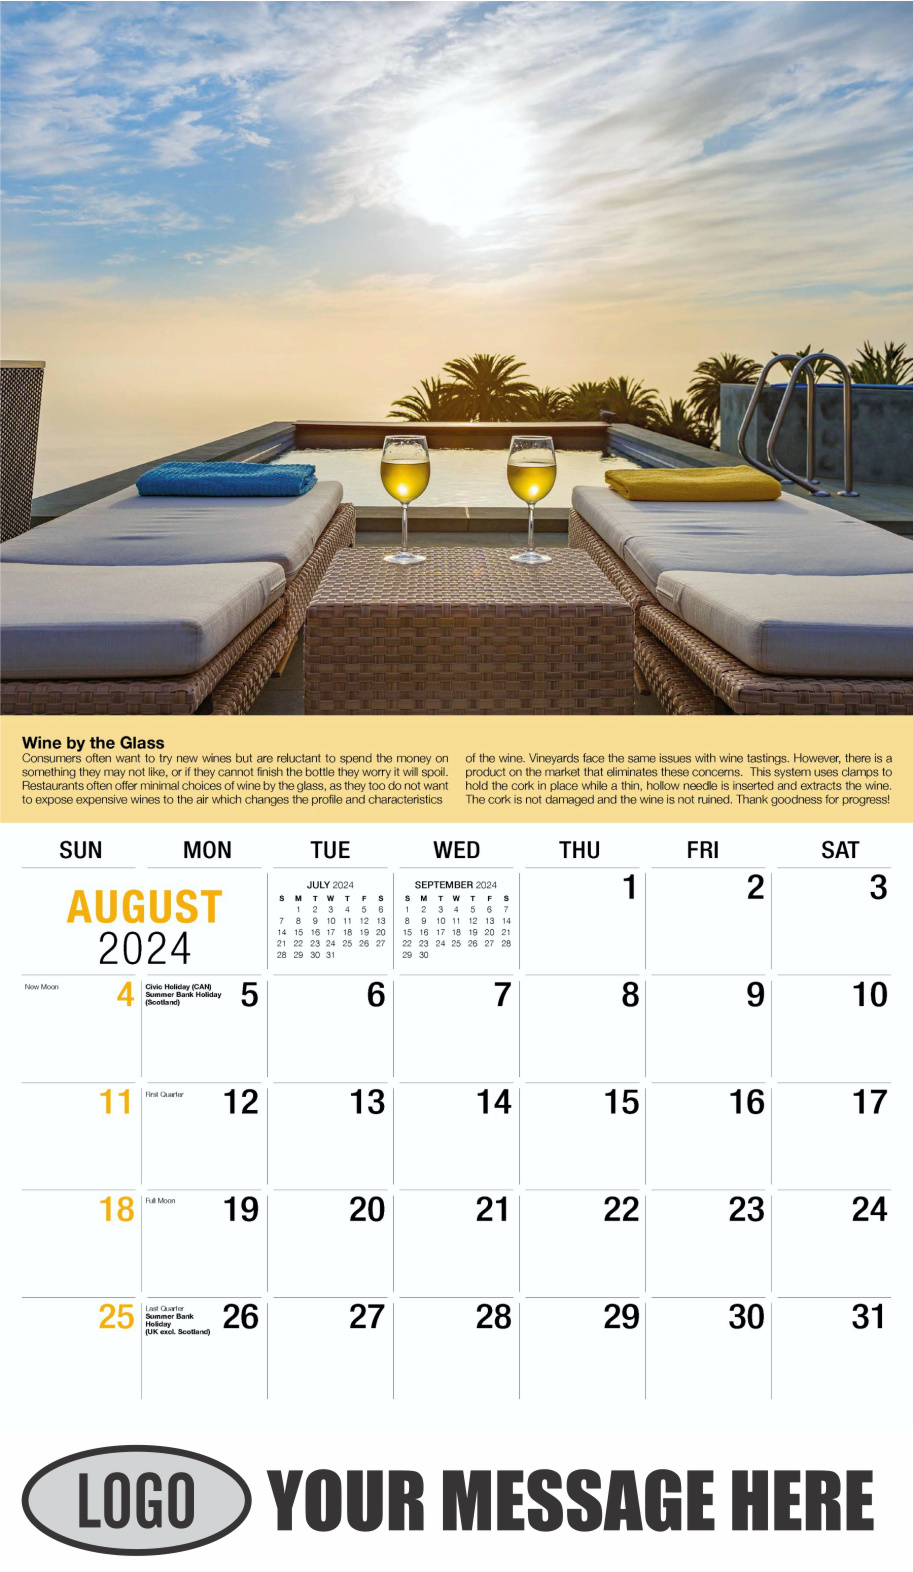 Vintages - Wine Tips 2024 Business Promo Calendar - August